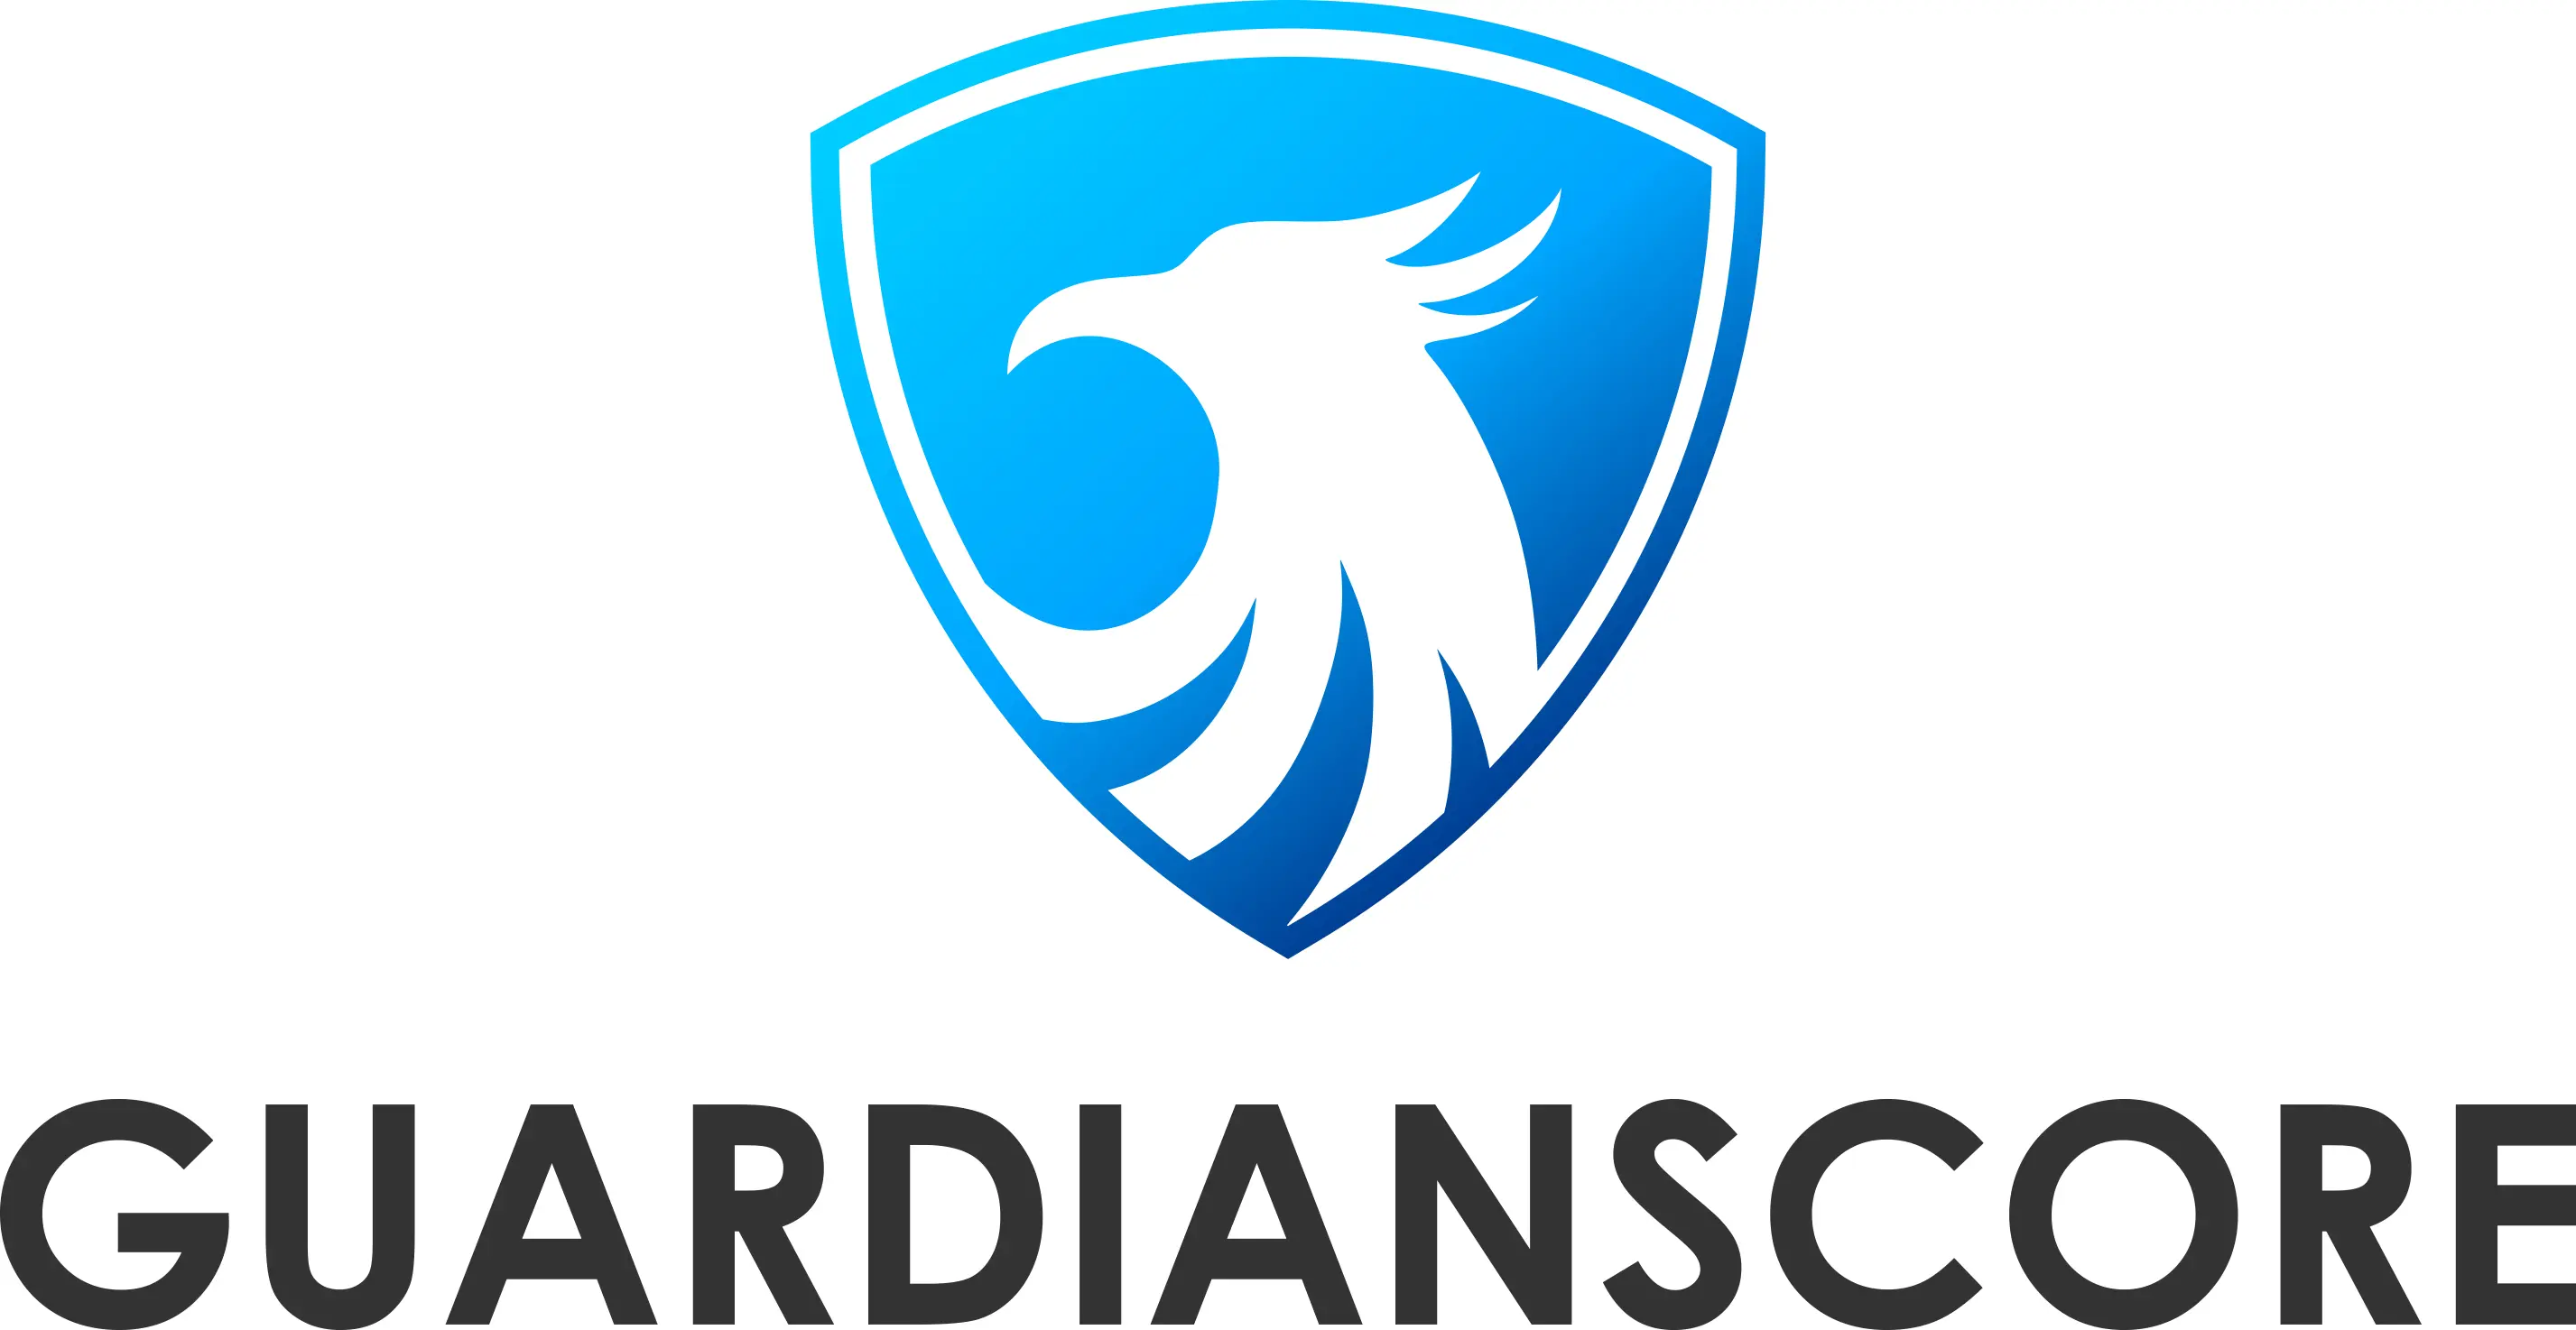 Guardian Score Logo - White Background